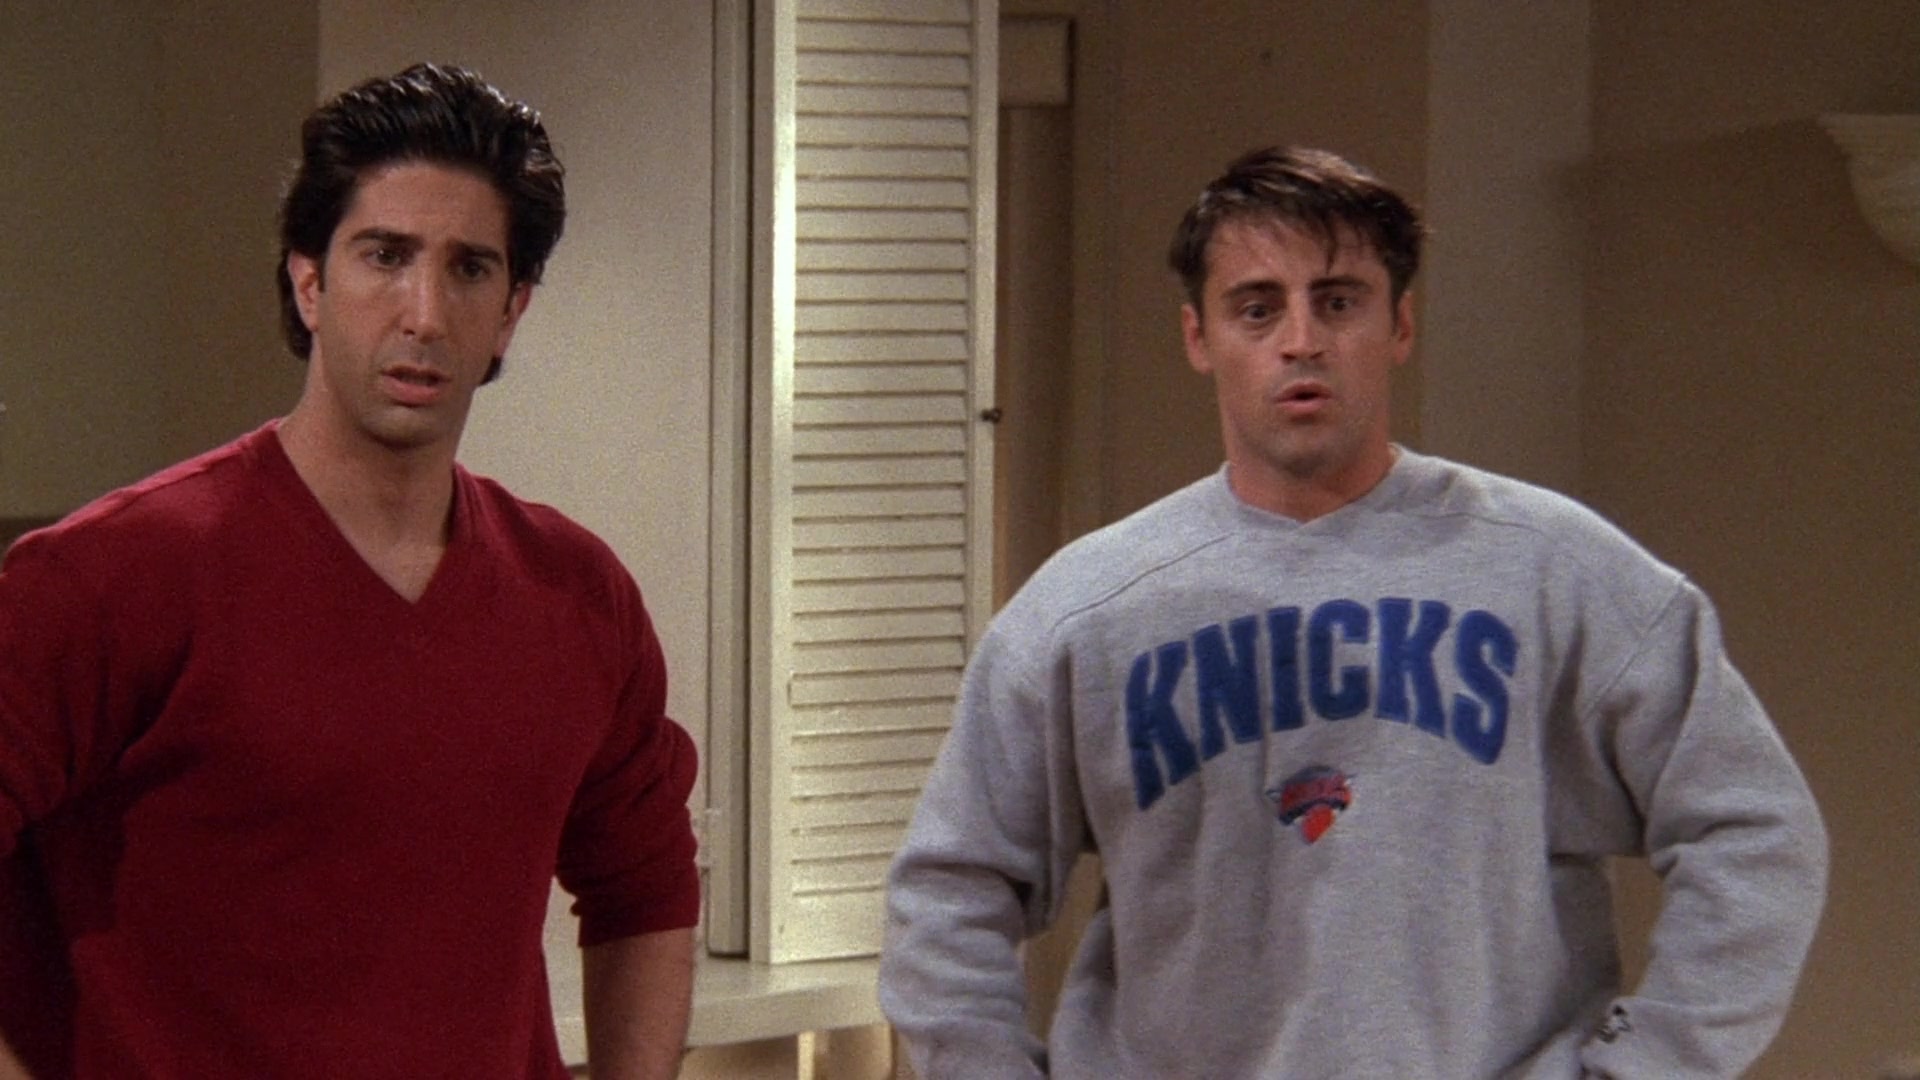 Joey Tribbiani Knicks Friends 90s Unisex N€W York Sweatshirt